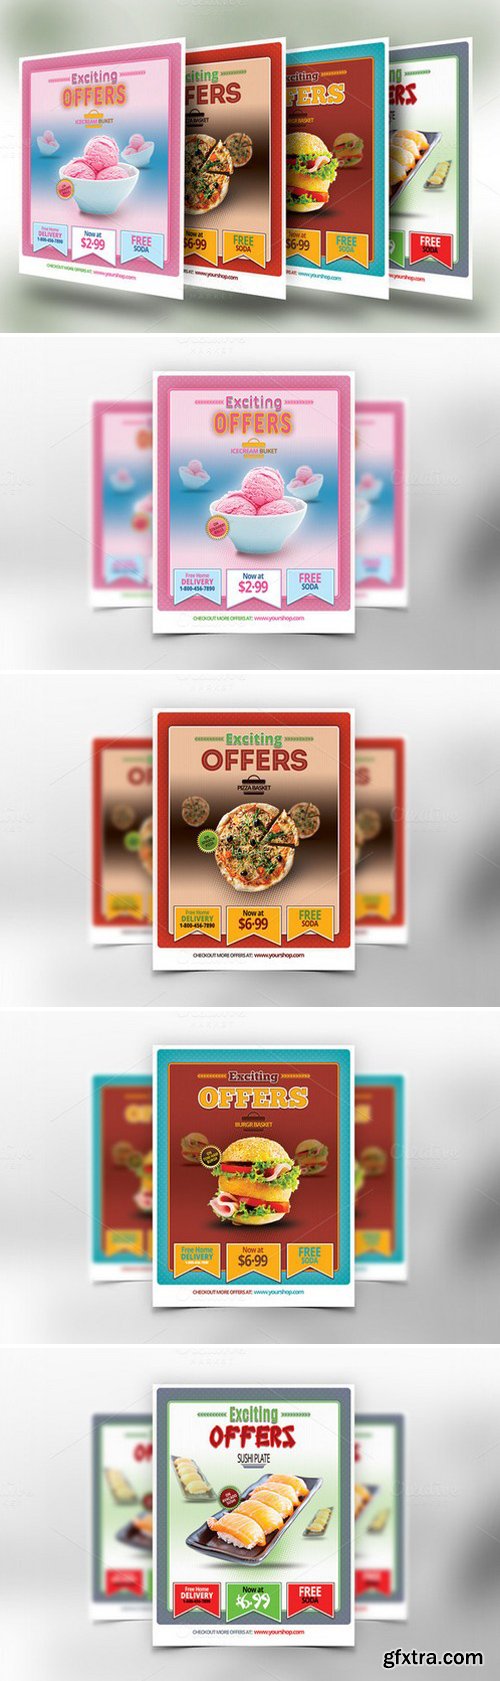 CM282934 - Restaurant Food Offers Flyer or Post